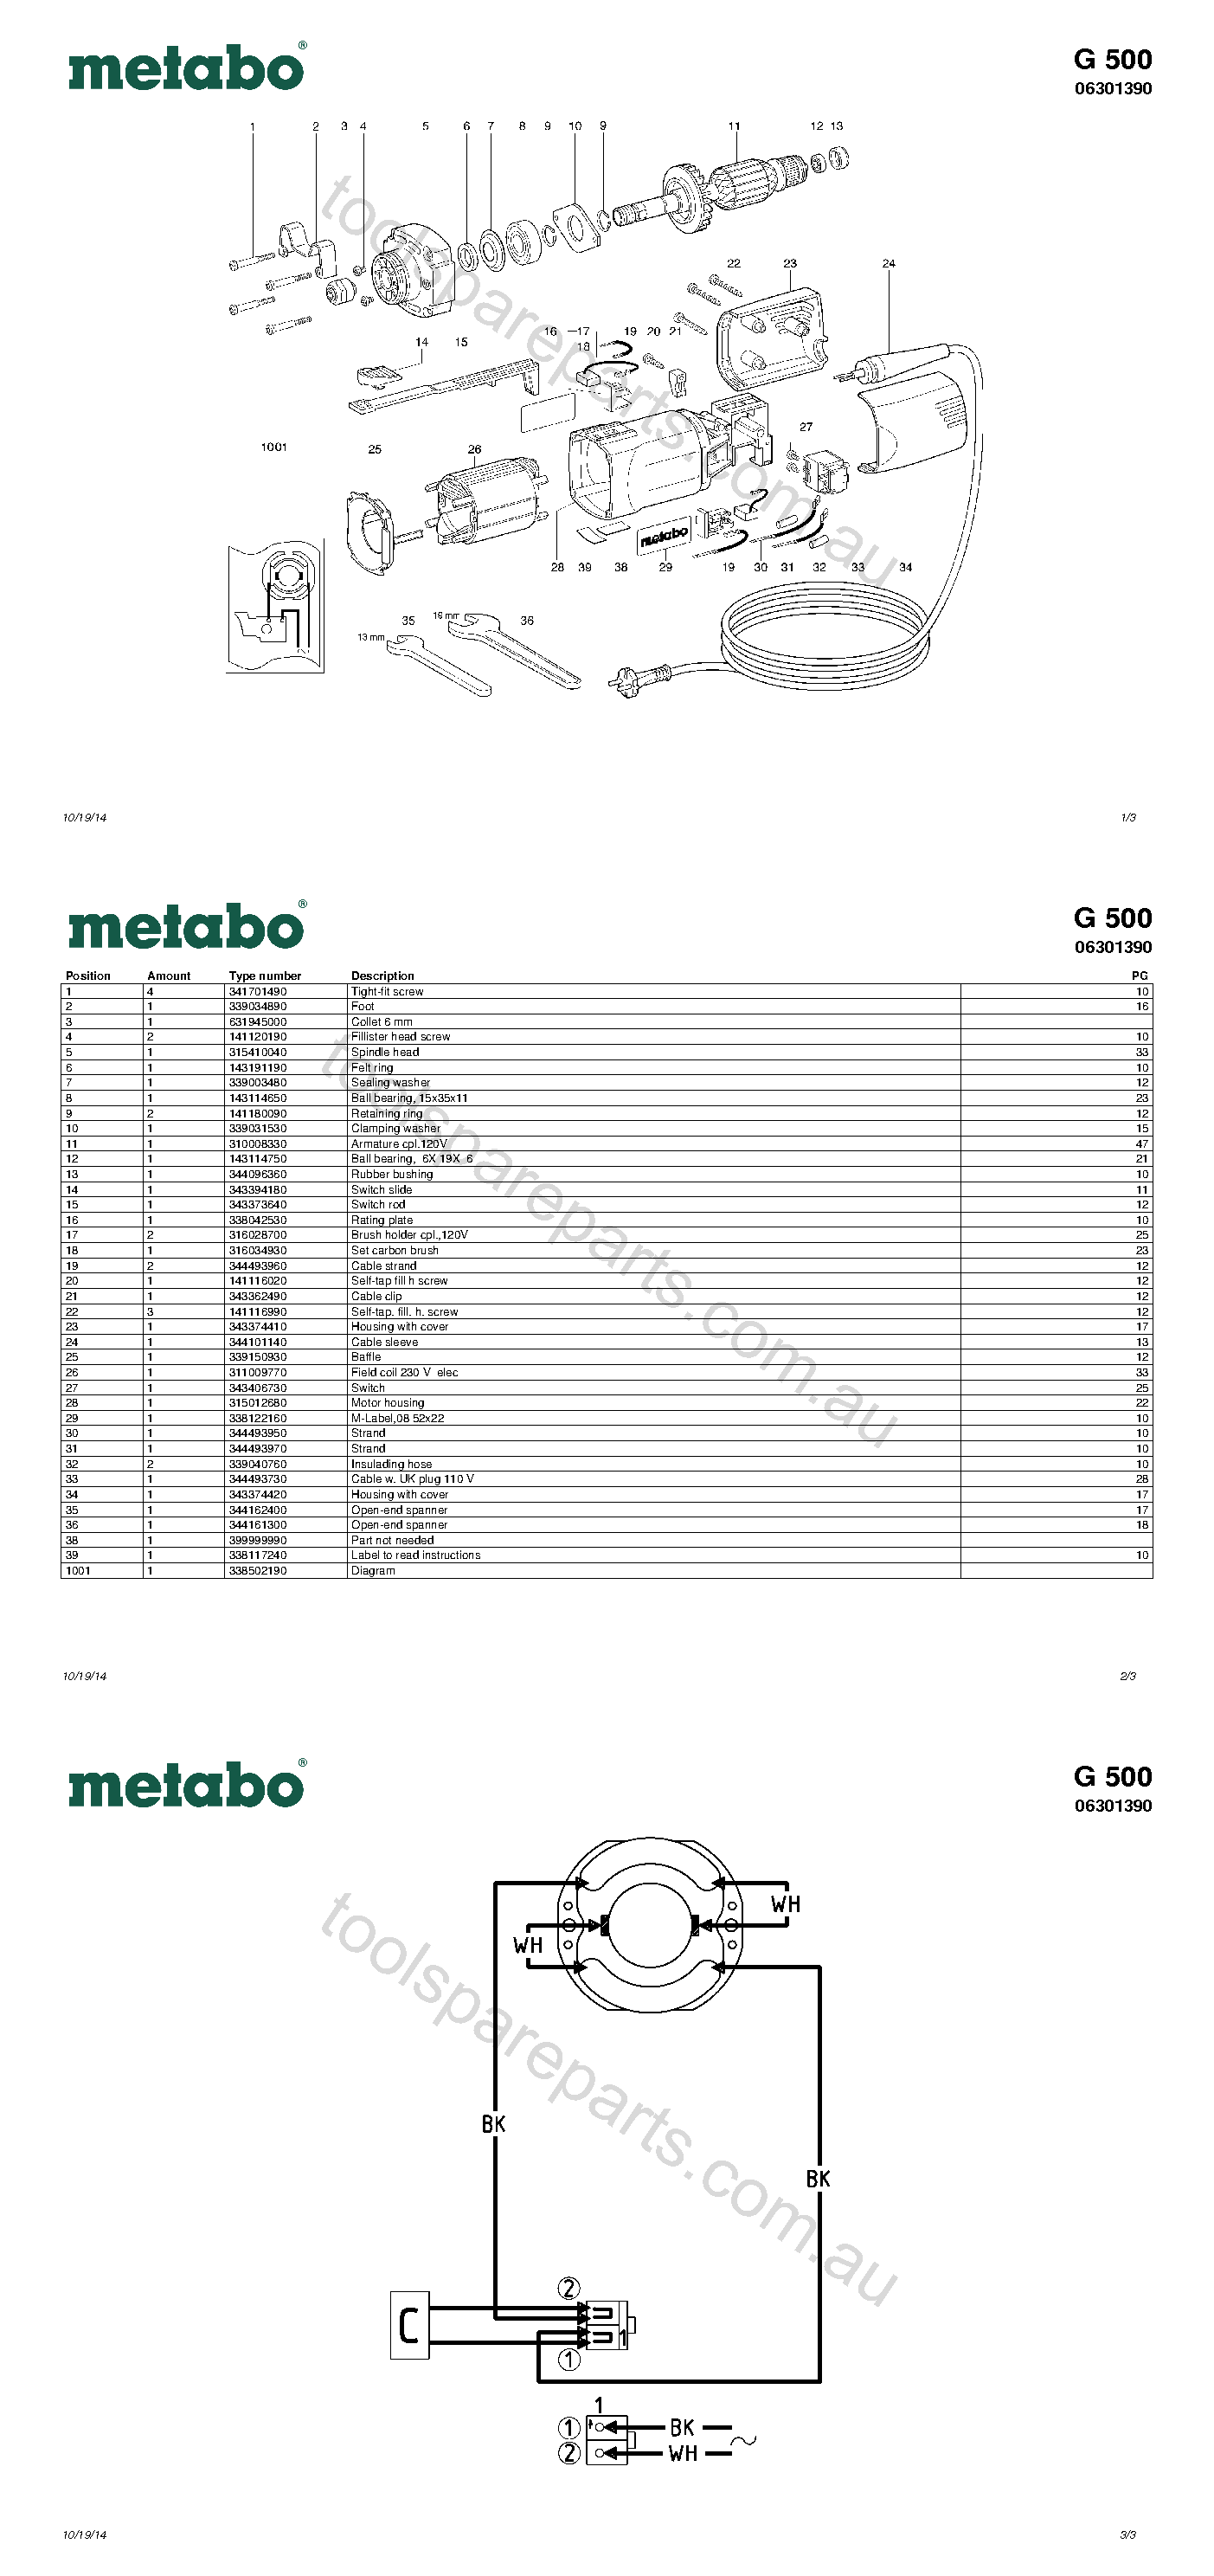 Metabo G 500 06301390  Diagram 1